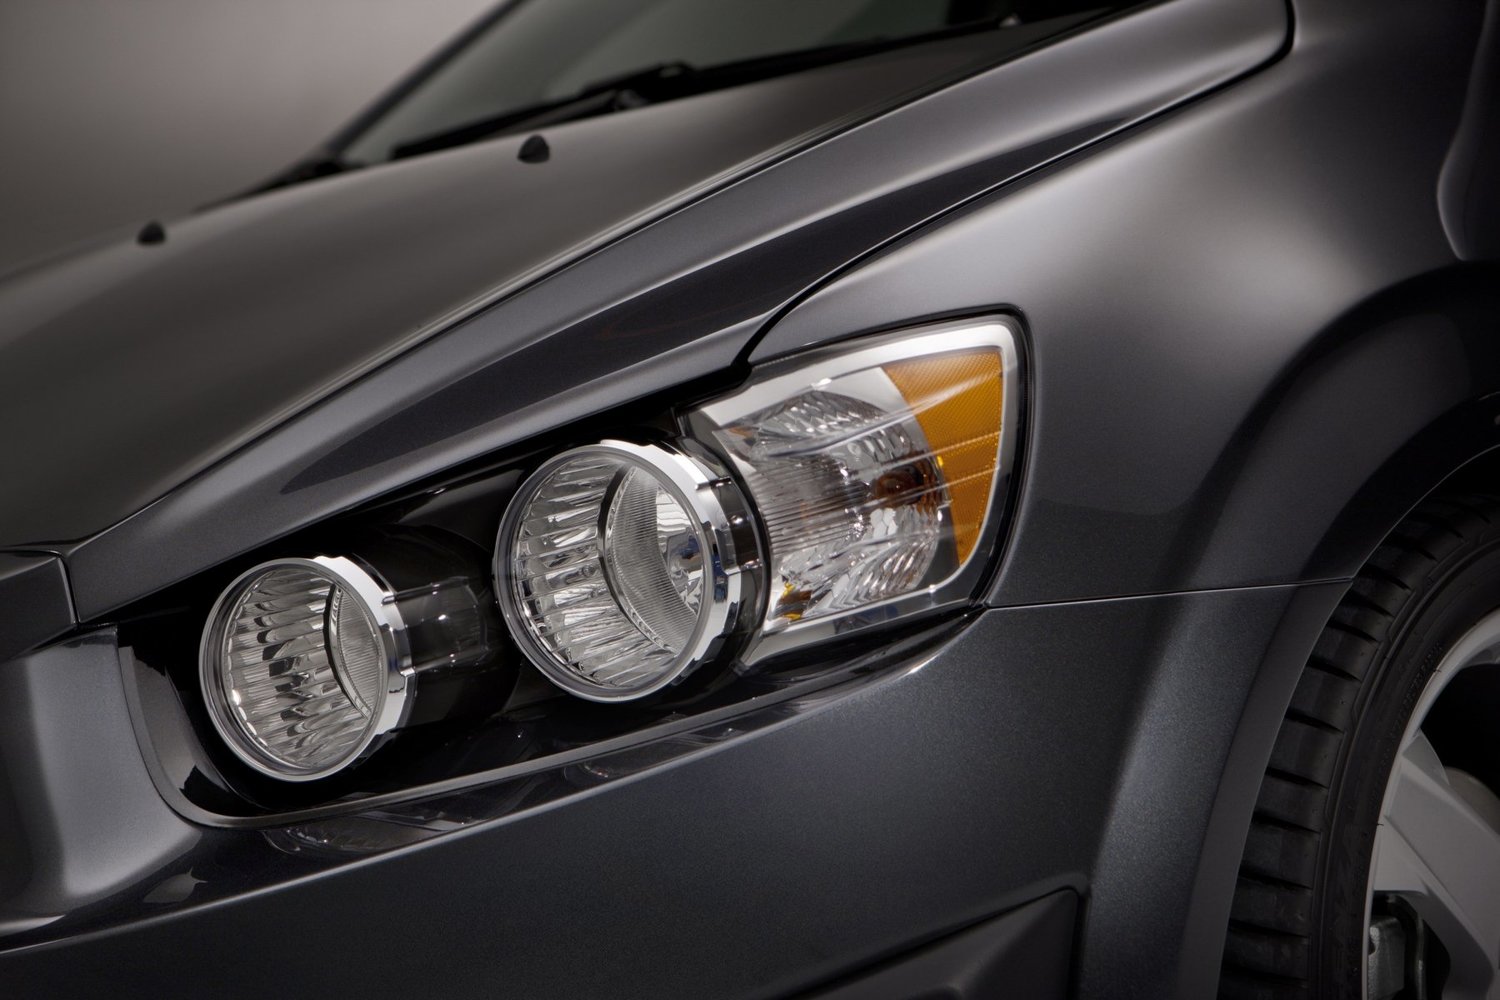 седан Chevrolet Aveo 2012 - 2016г выпуска модификация 1.2 MT (86 л.с.)